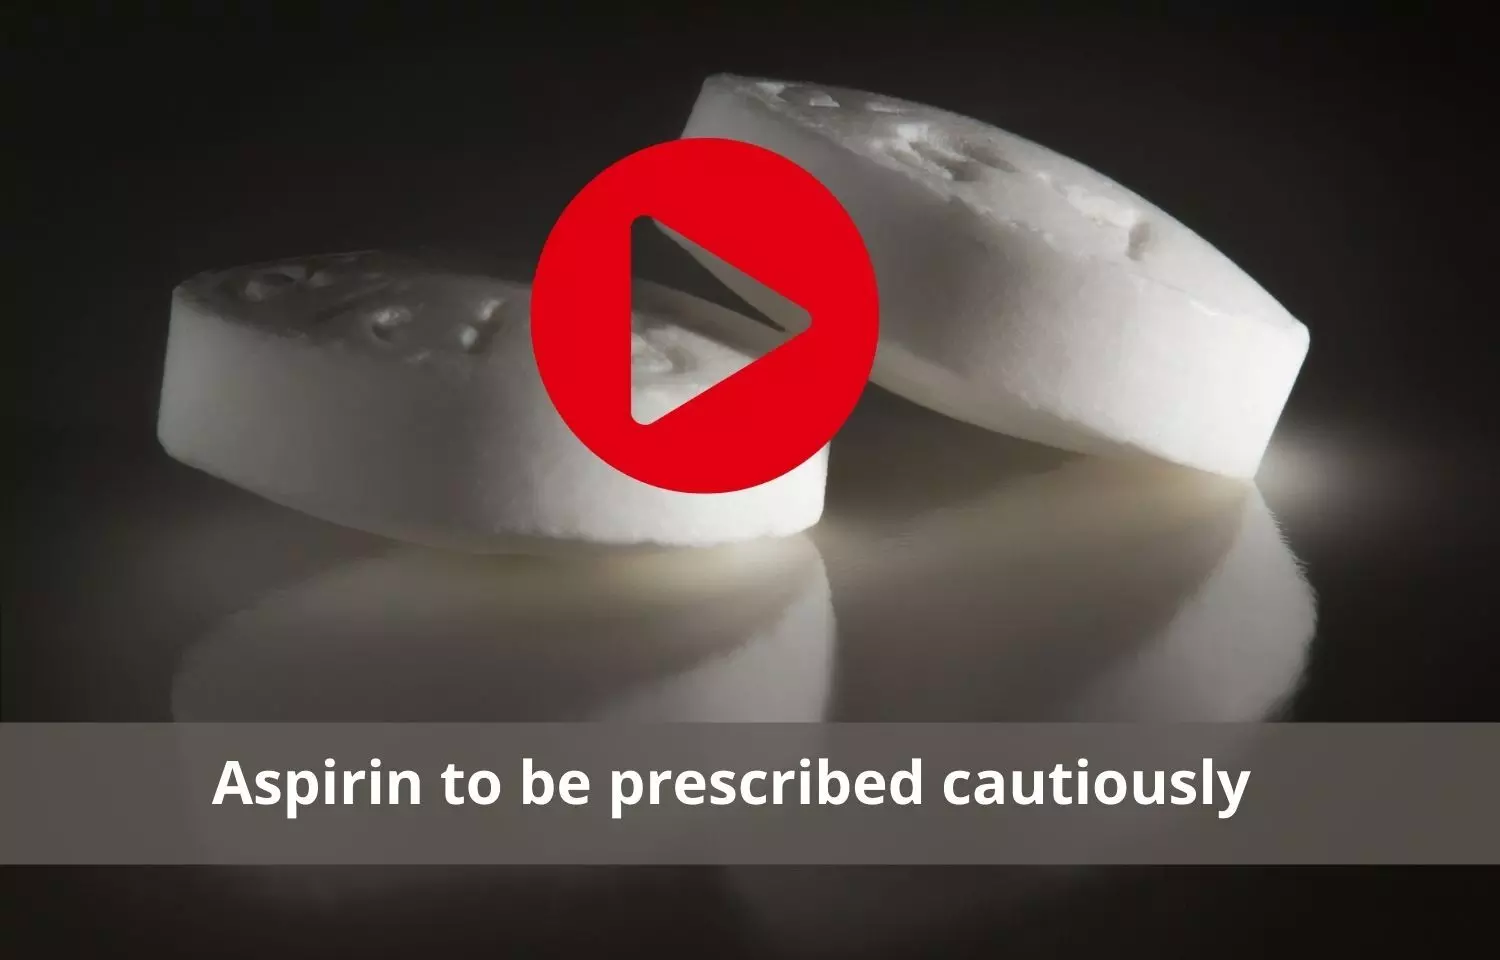 Aspirin can be prescribed based on risk factors